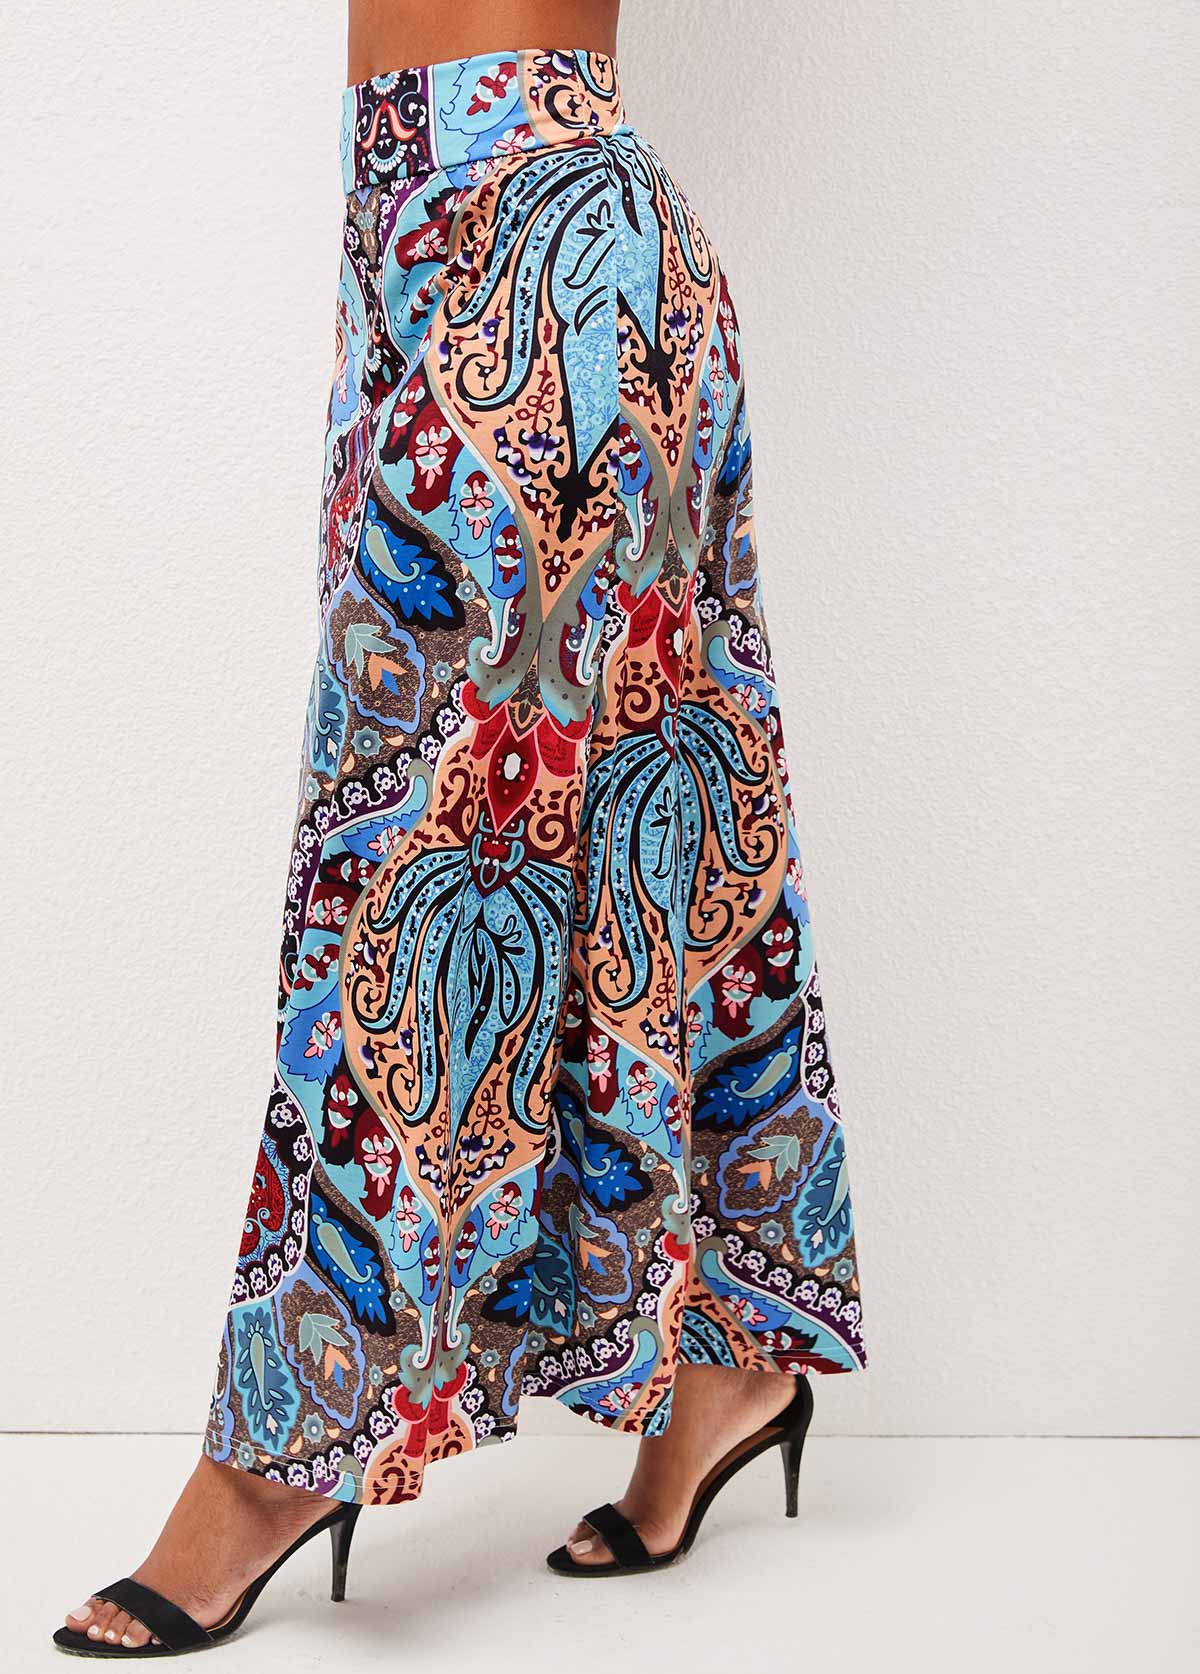 Multi Color Tribal Print High Waist Skirt | Rosewe.com - USD $19.99